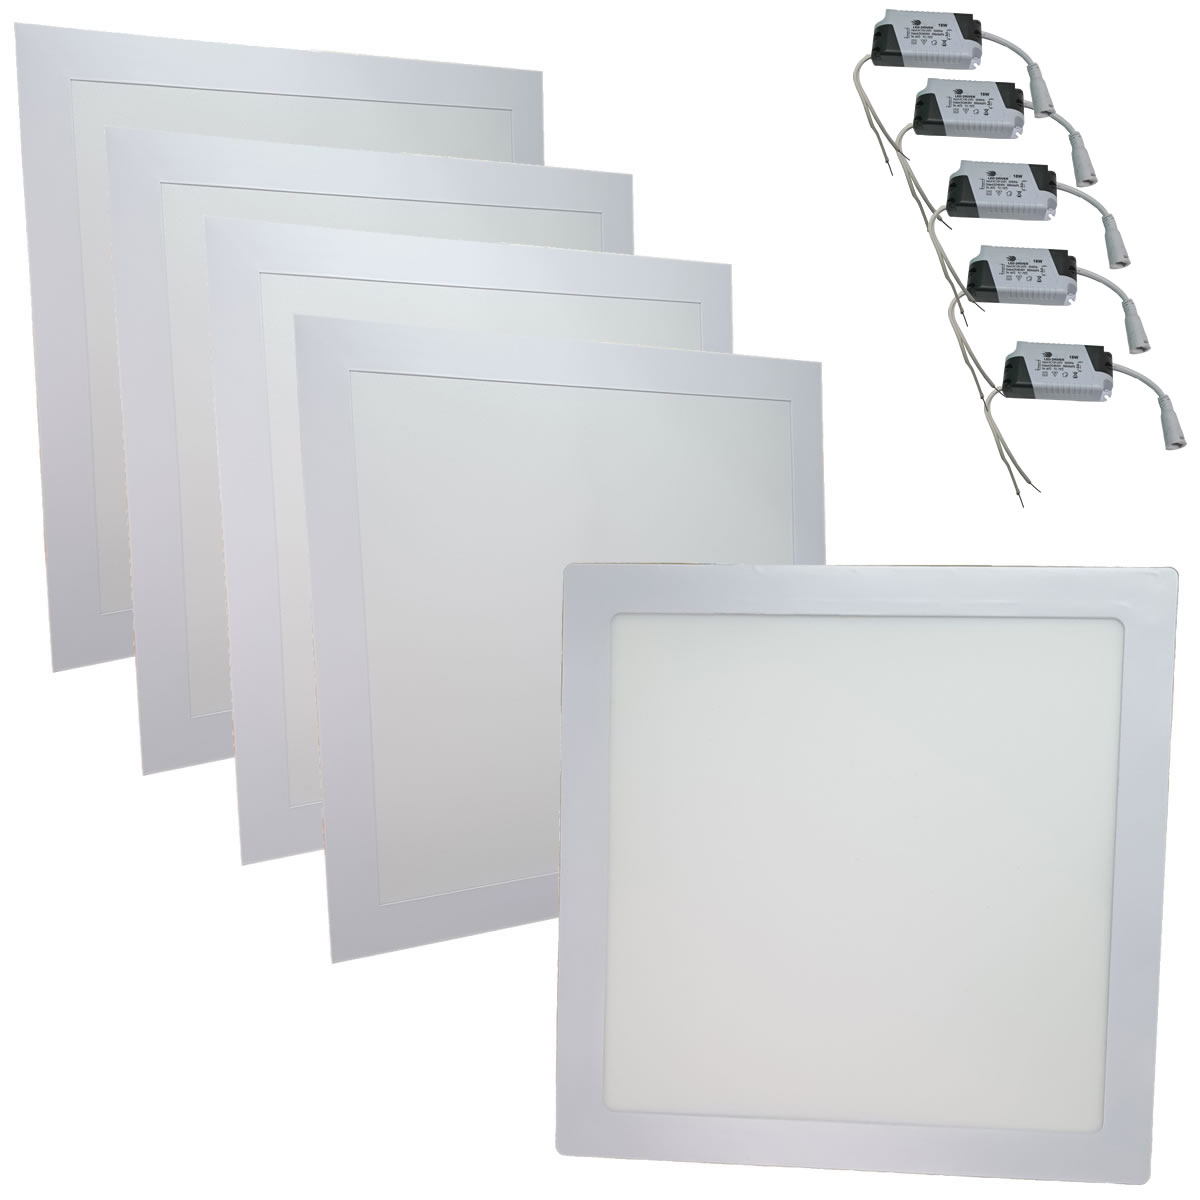 KIT 5 Painel Plafon LED 18W Quadrado Luz Branca Quente de Embutir